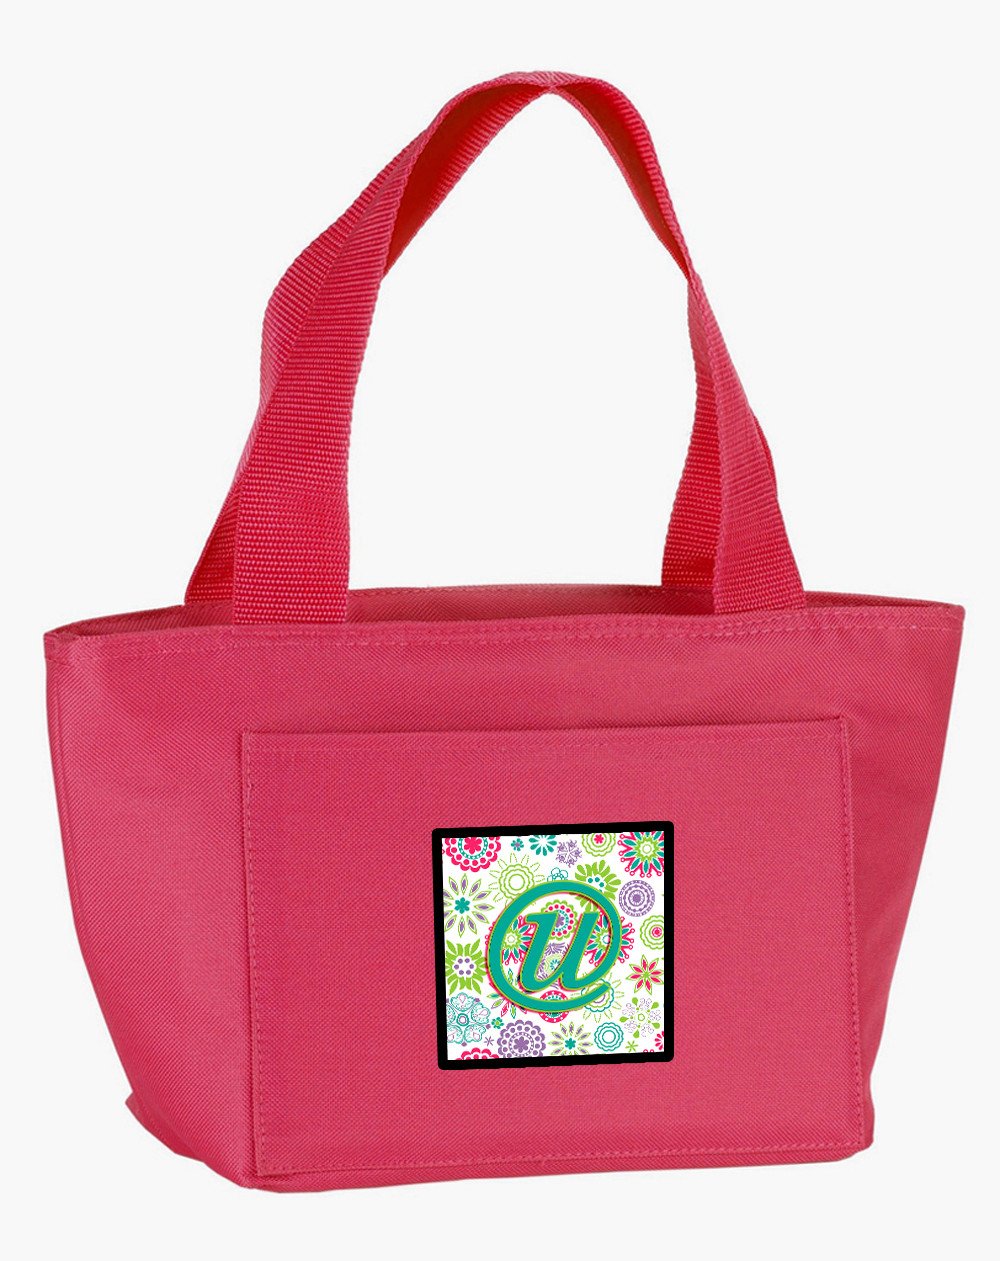 Letter U Flowers Pink Teal Green Initial Lunch Bag CJ2011-UPK-8808 by Caroline's Treasures